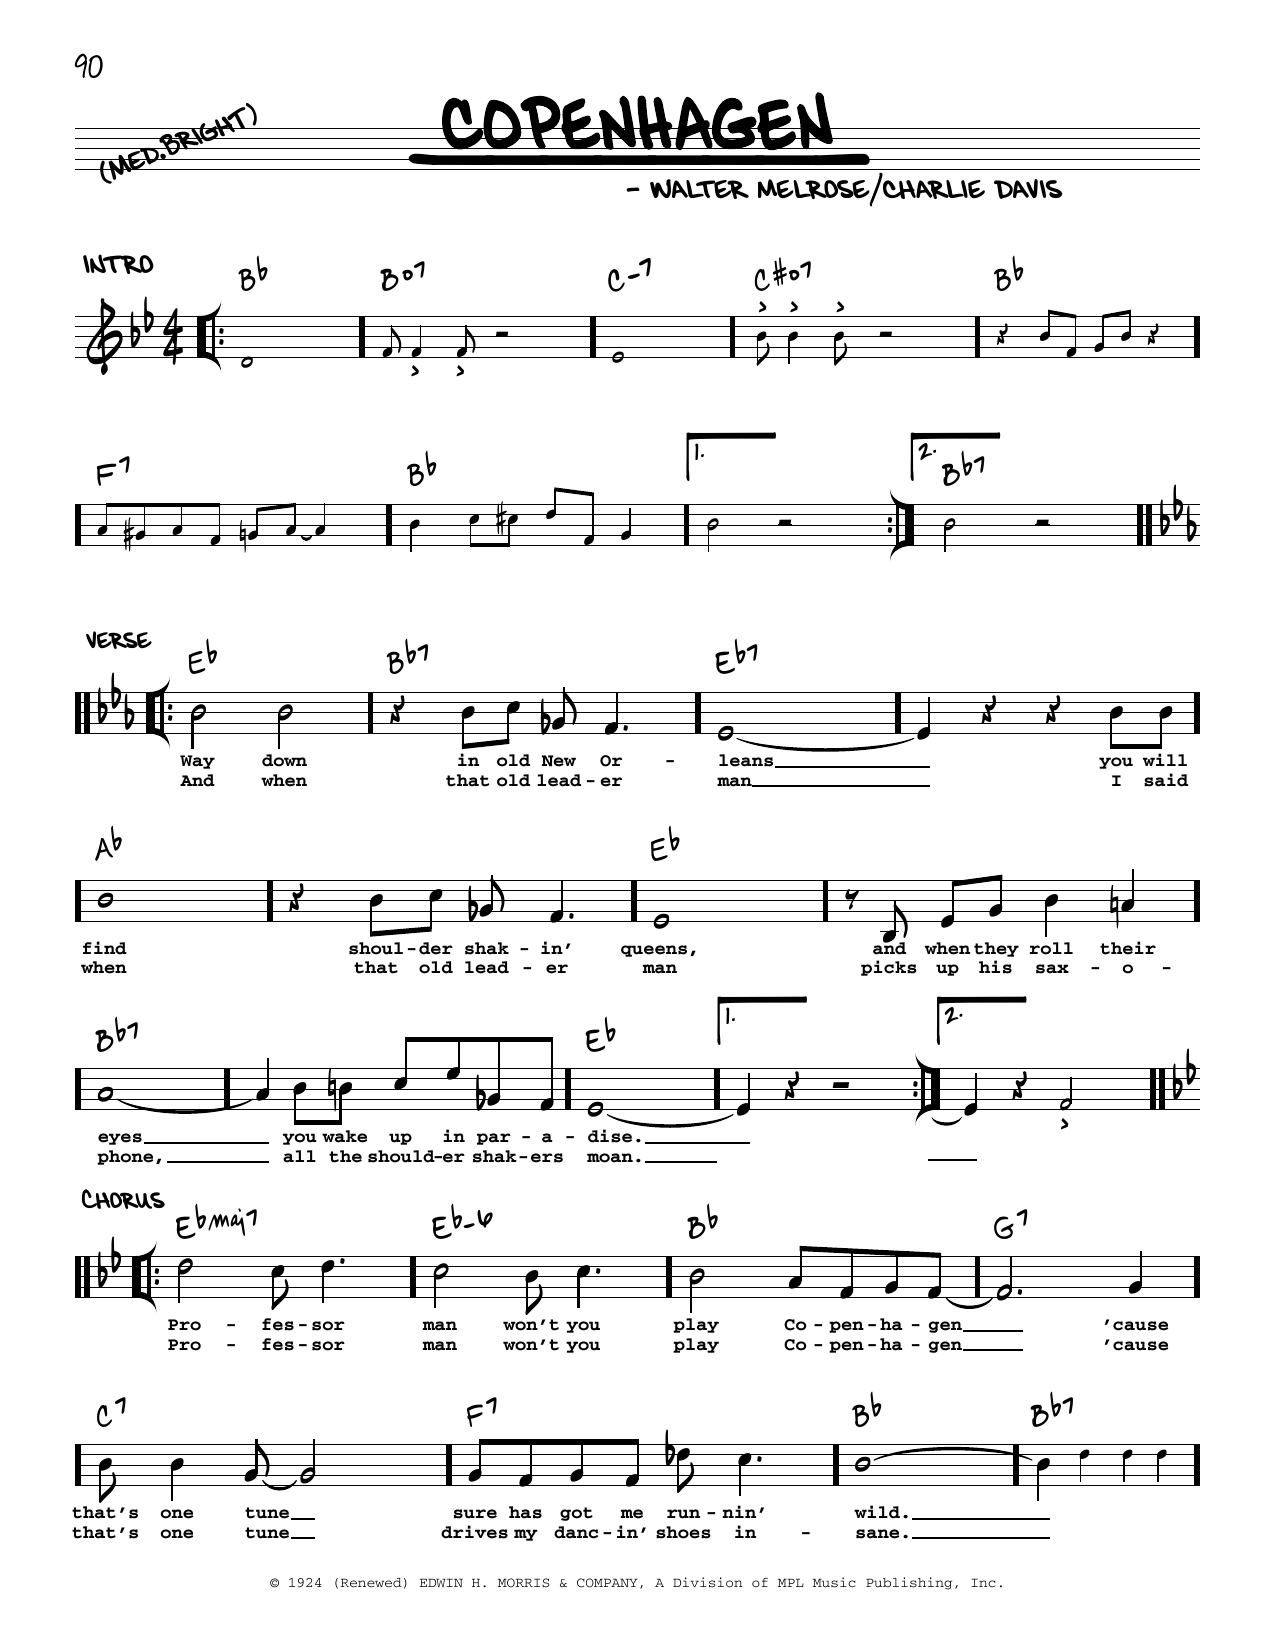 Walter Melrose Copenhagen (arr. Robert Rawlins) Sheet Music Notes & Chords for Real Book – Melody, Lyrics & Chords - Download or Print PDF